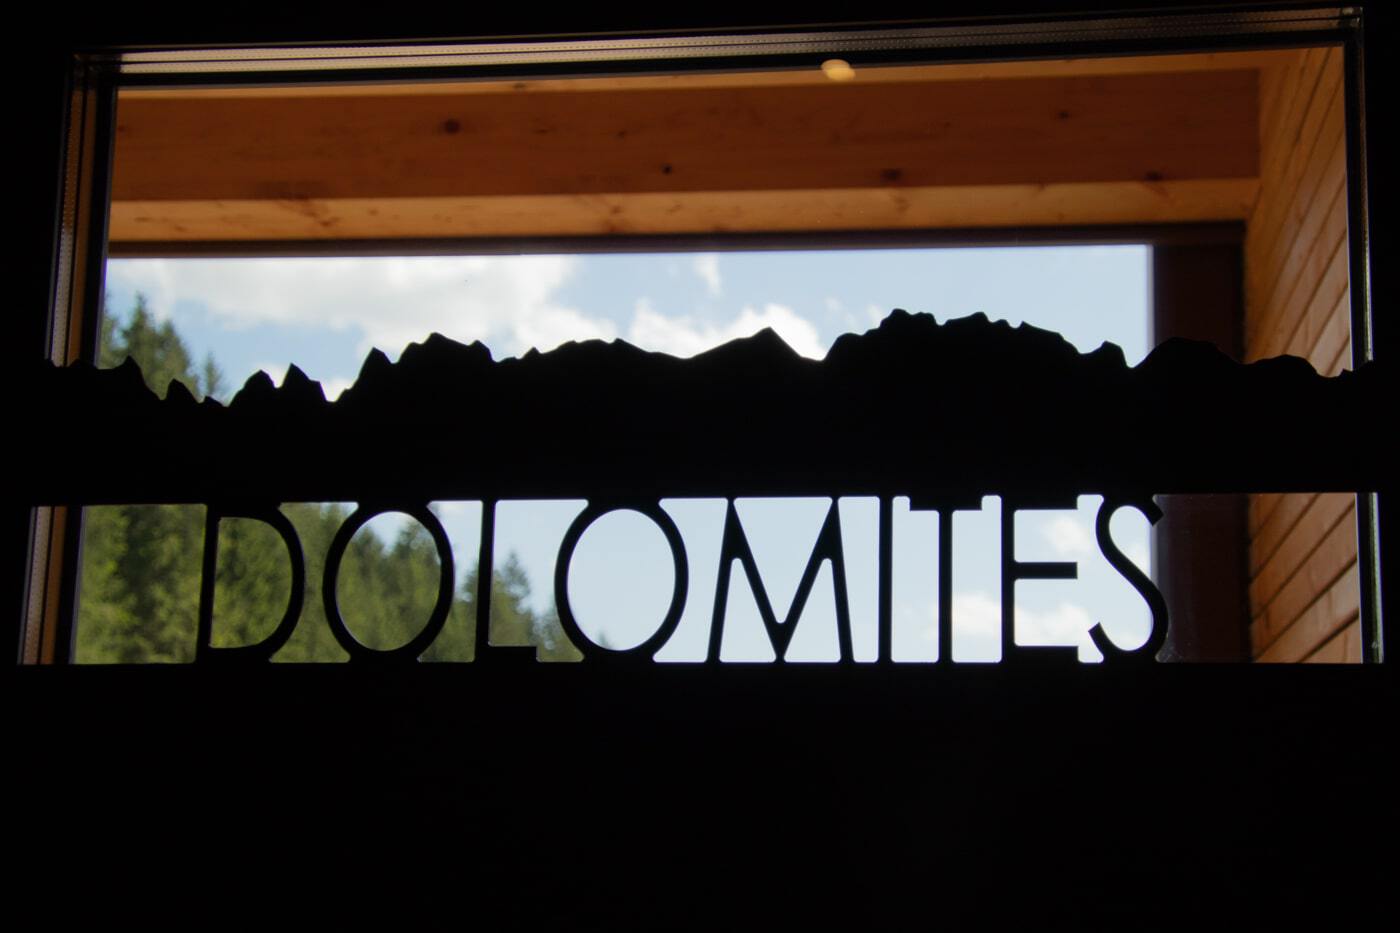 Dolomites sign on a door at qc terme spa in val di fassa trentino region